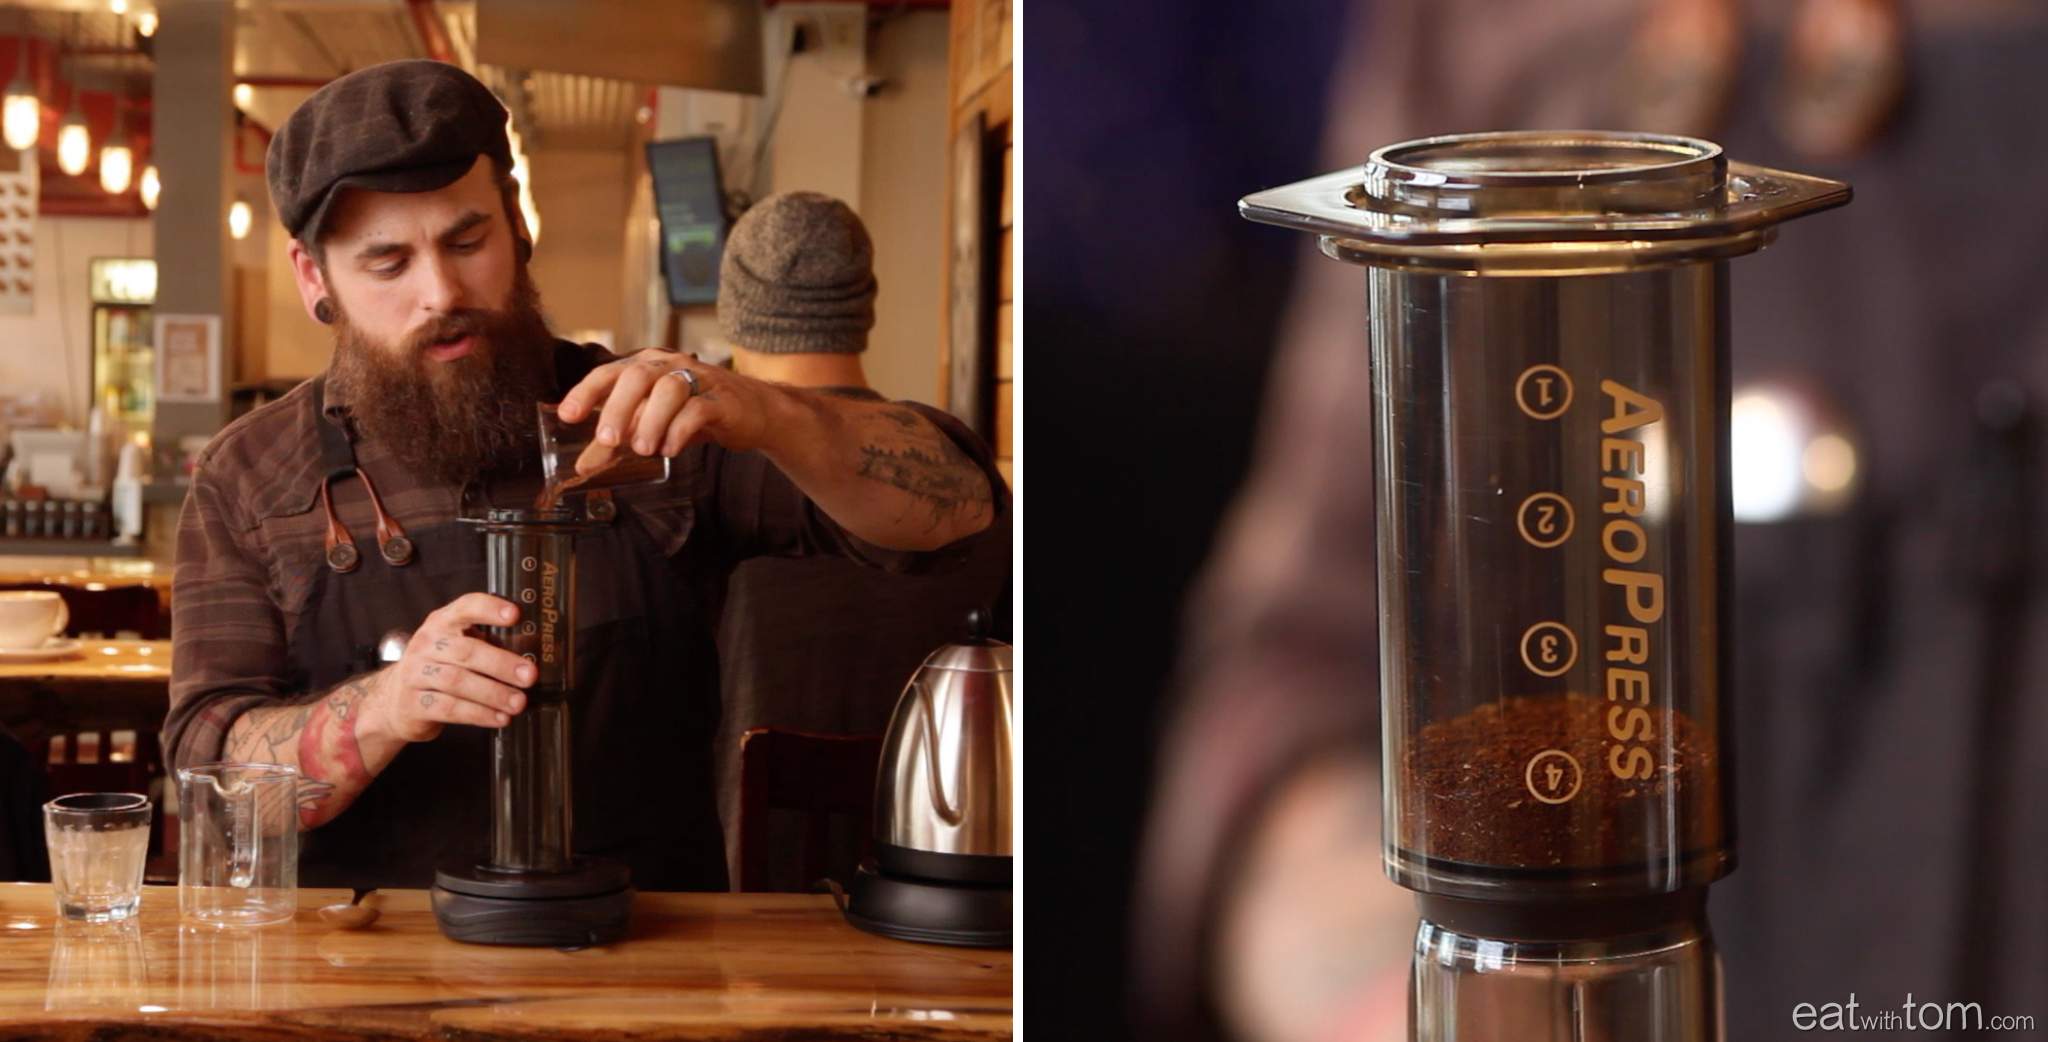 Tom schmidt photographer chicago video about coffee aeropress brewing method